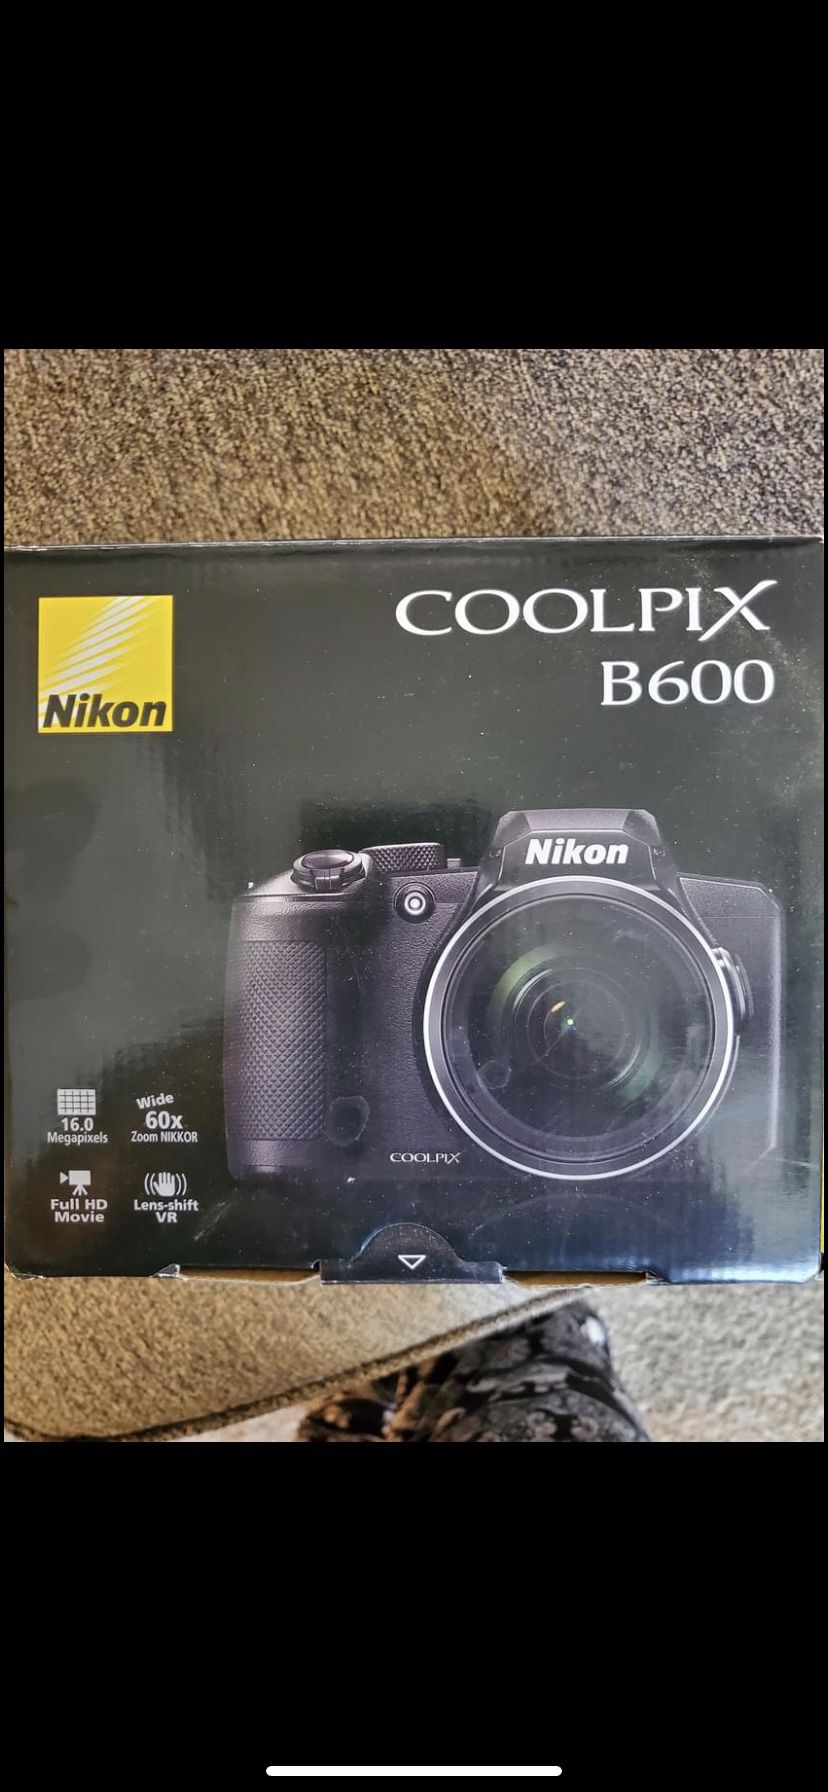 Nikon CoolPix B600 Digital Camera - Brand New, Unopened